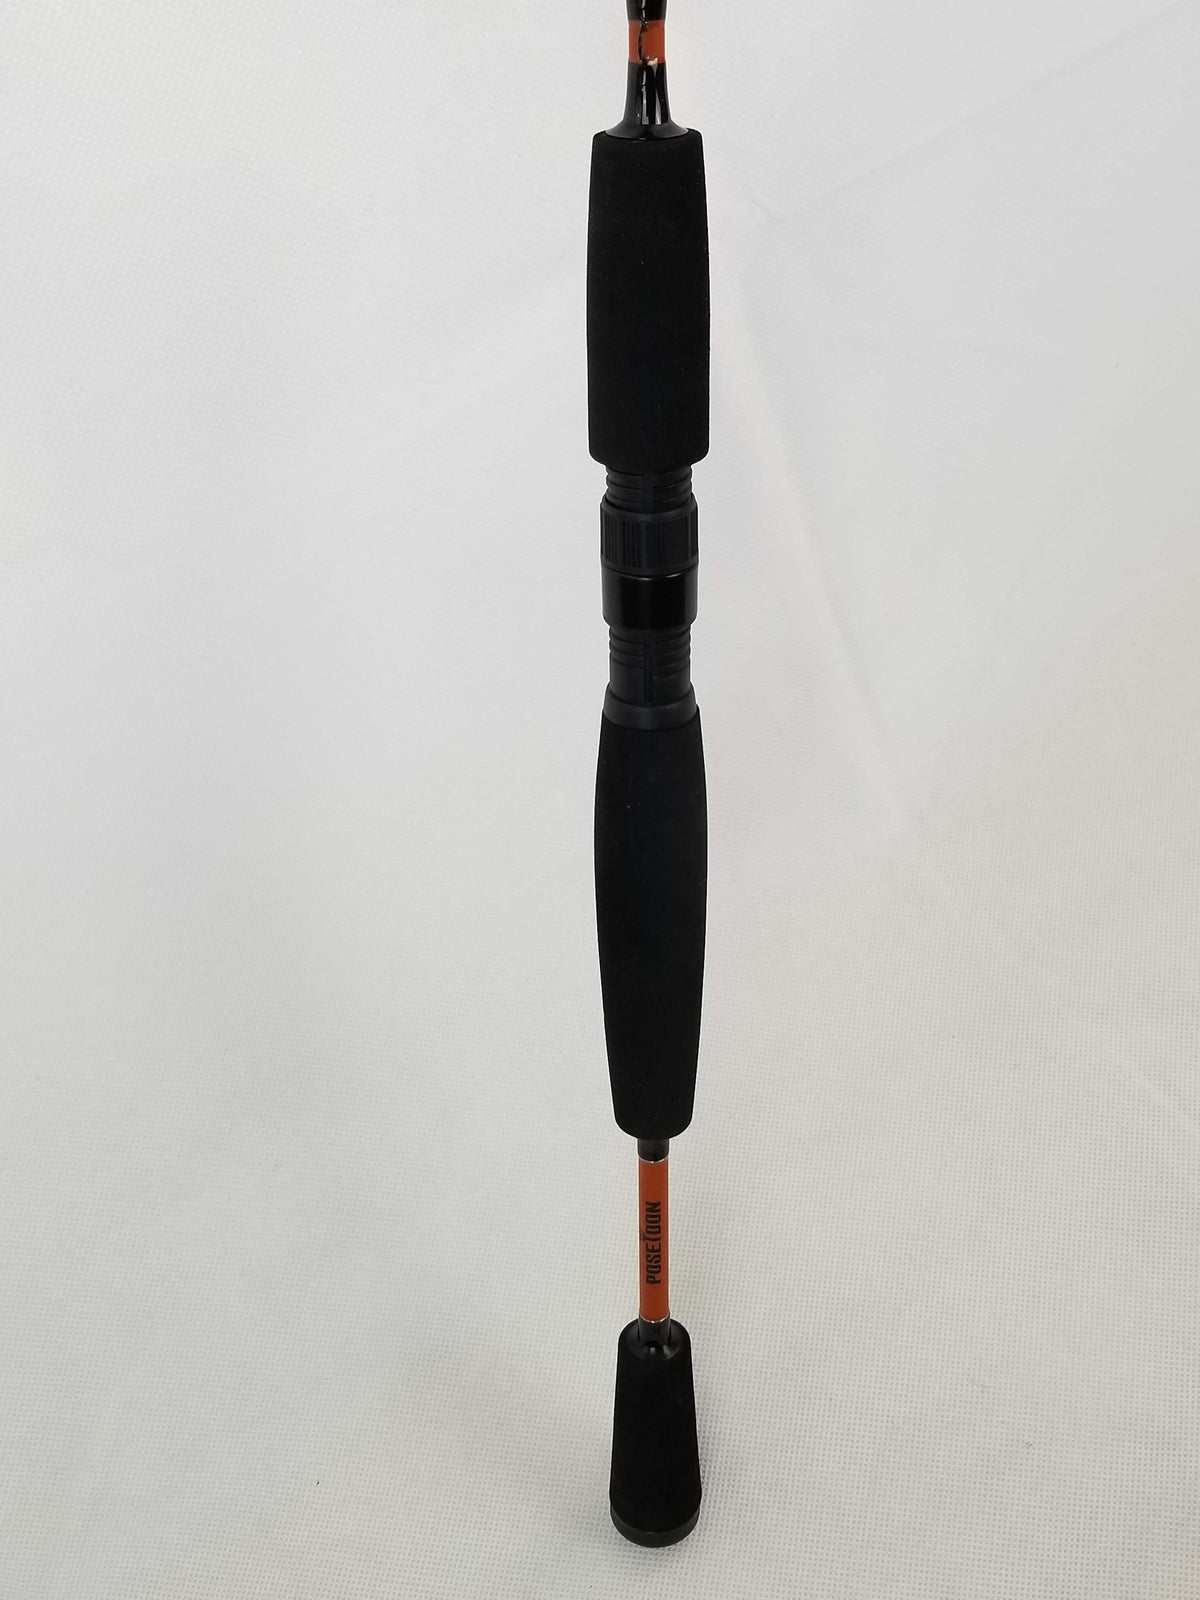 Cam's "Orange Poseidon"  6'2 ( 6+1 BB) Spinning Rod and Reel Combo